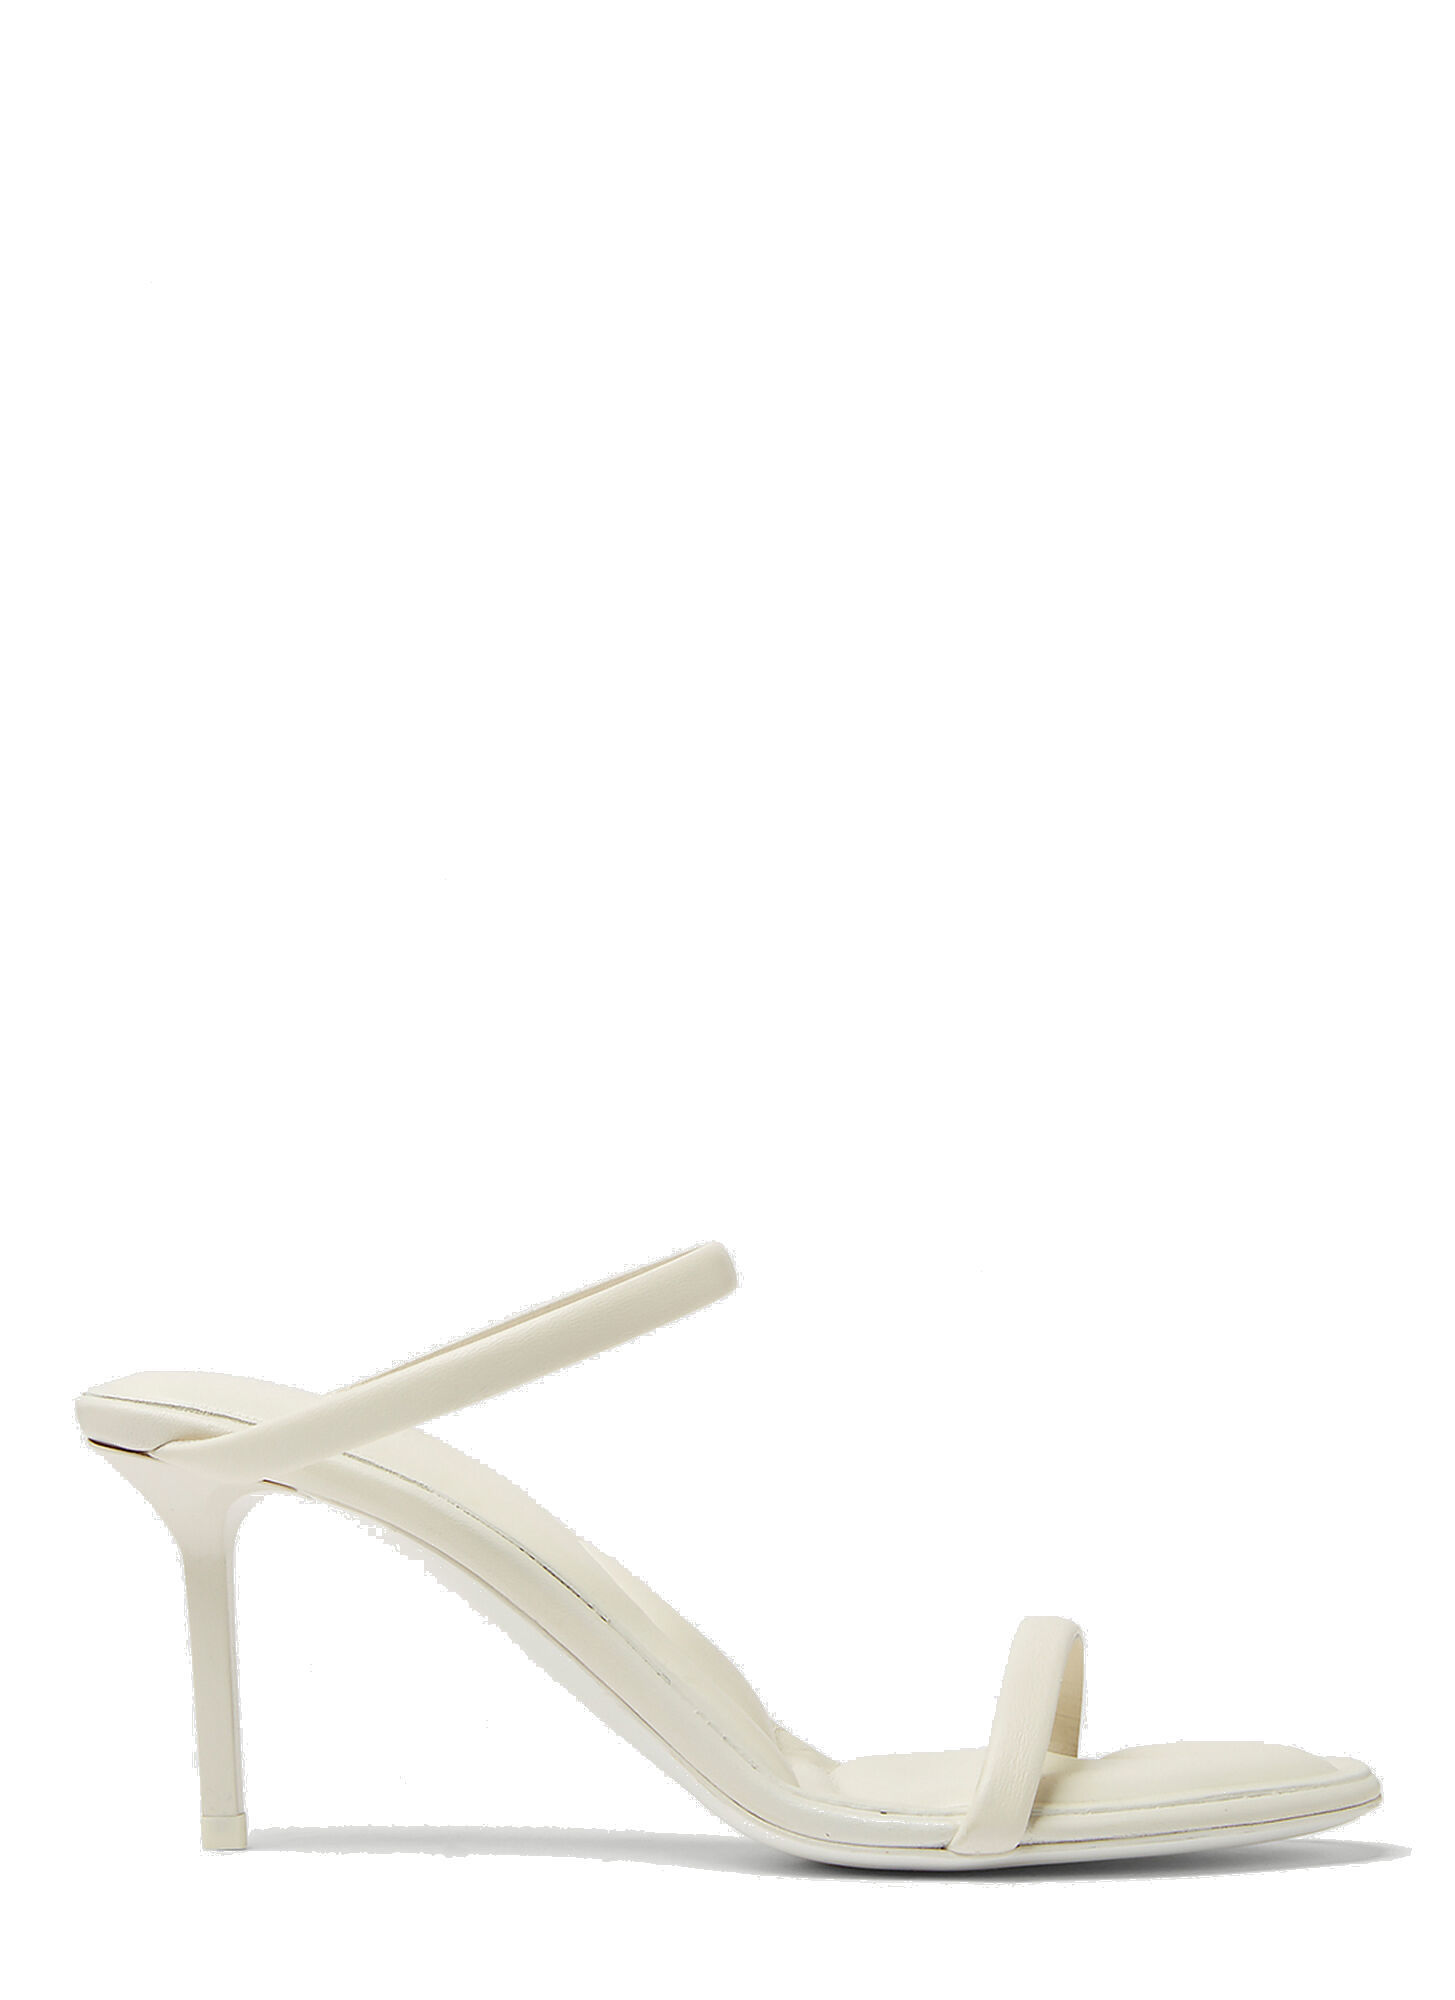 Photo: Vulcano Heeled Sandal in White